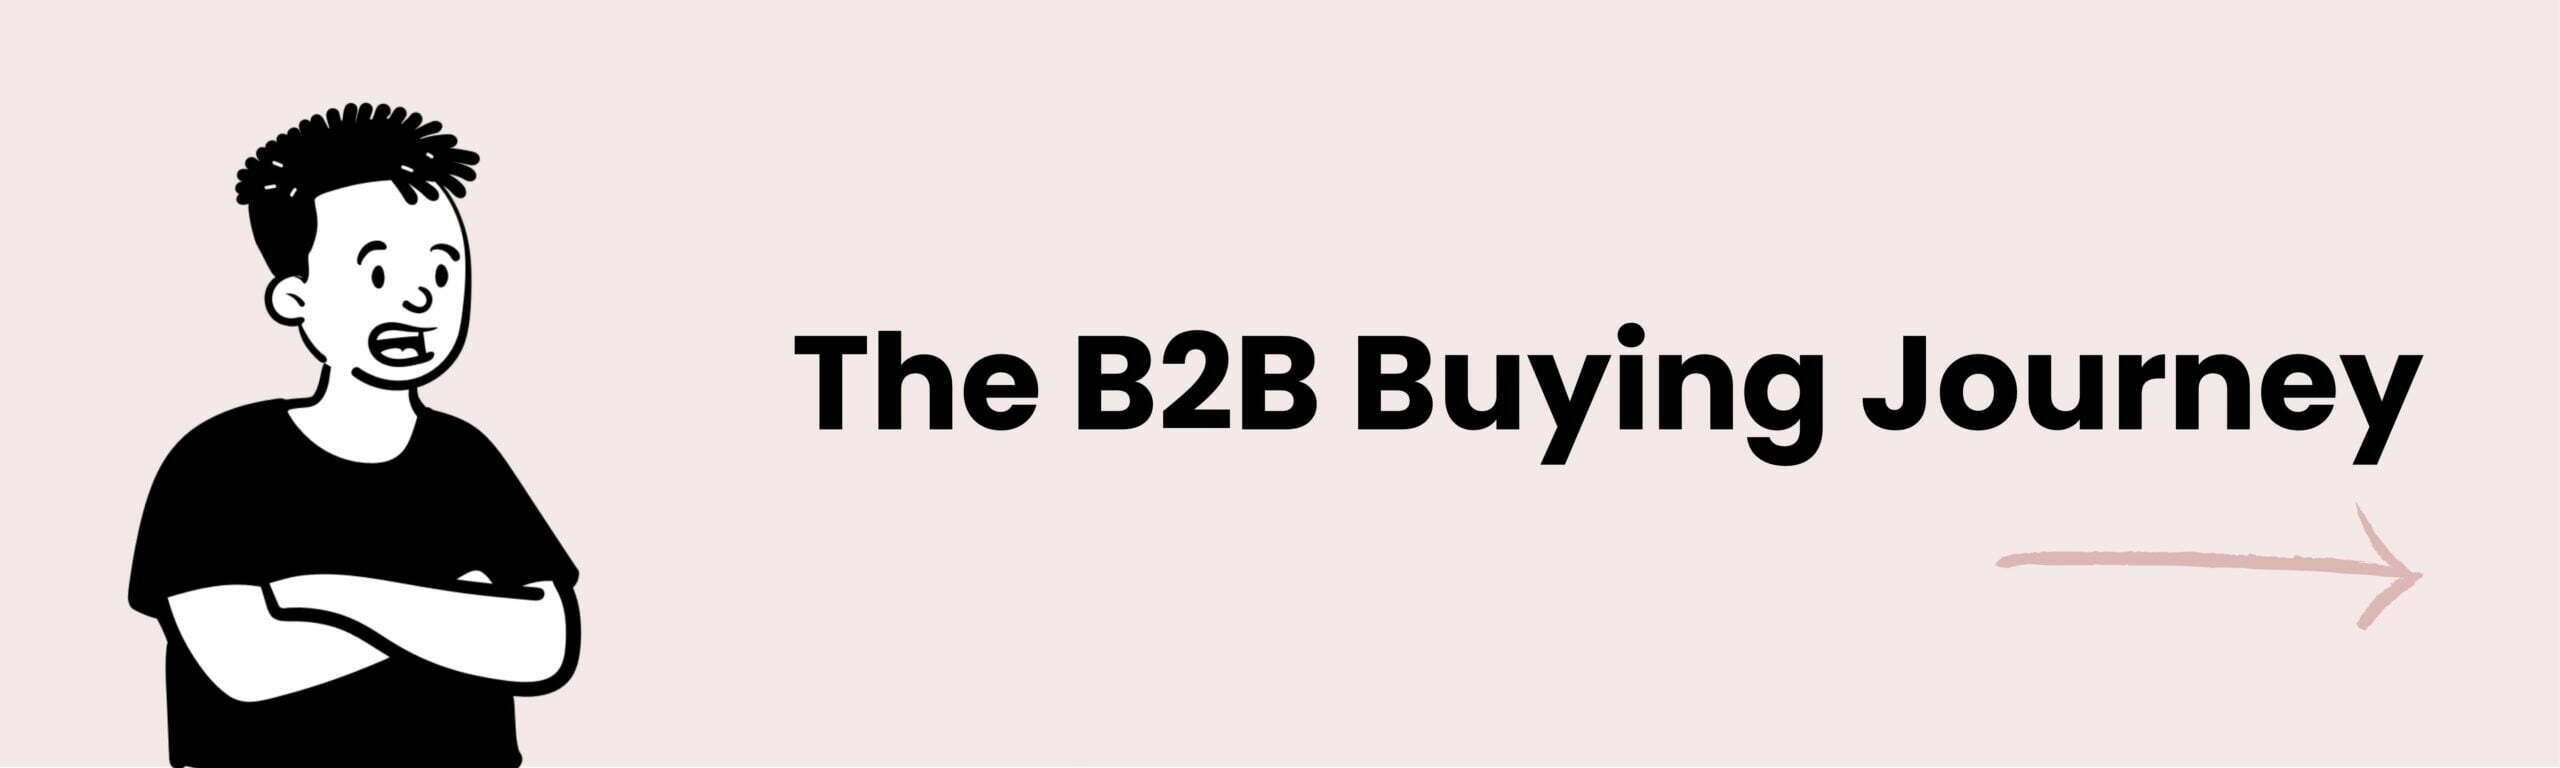 b2b buying journey gartner report